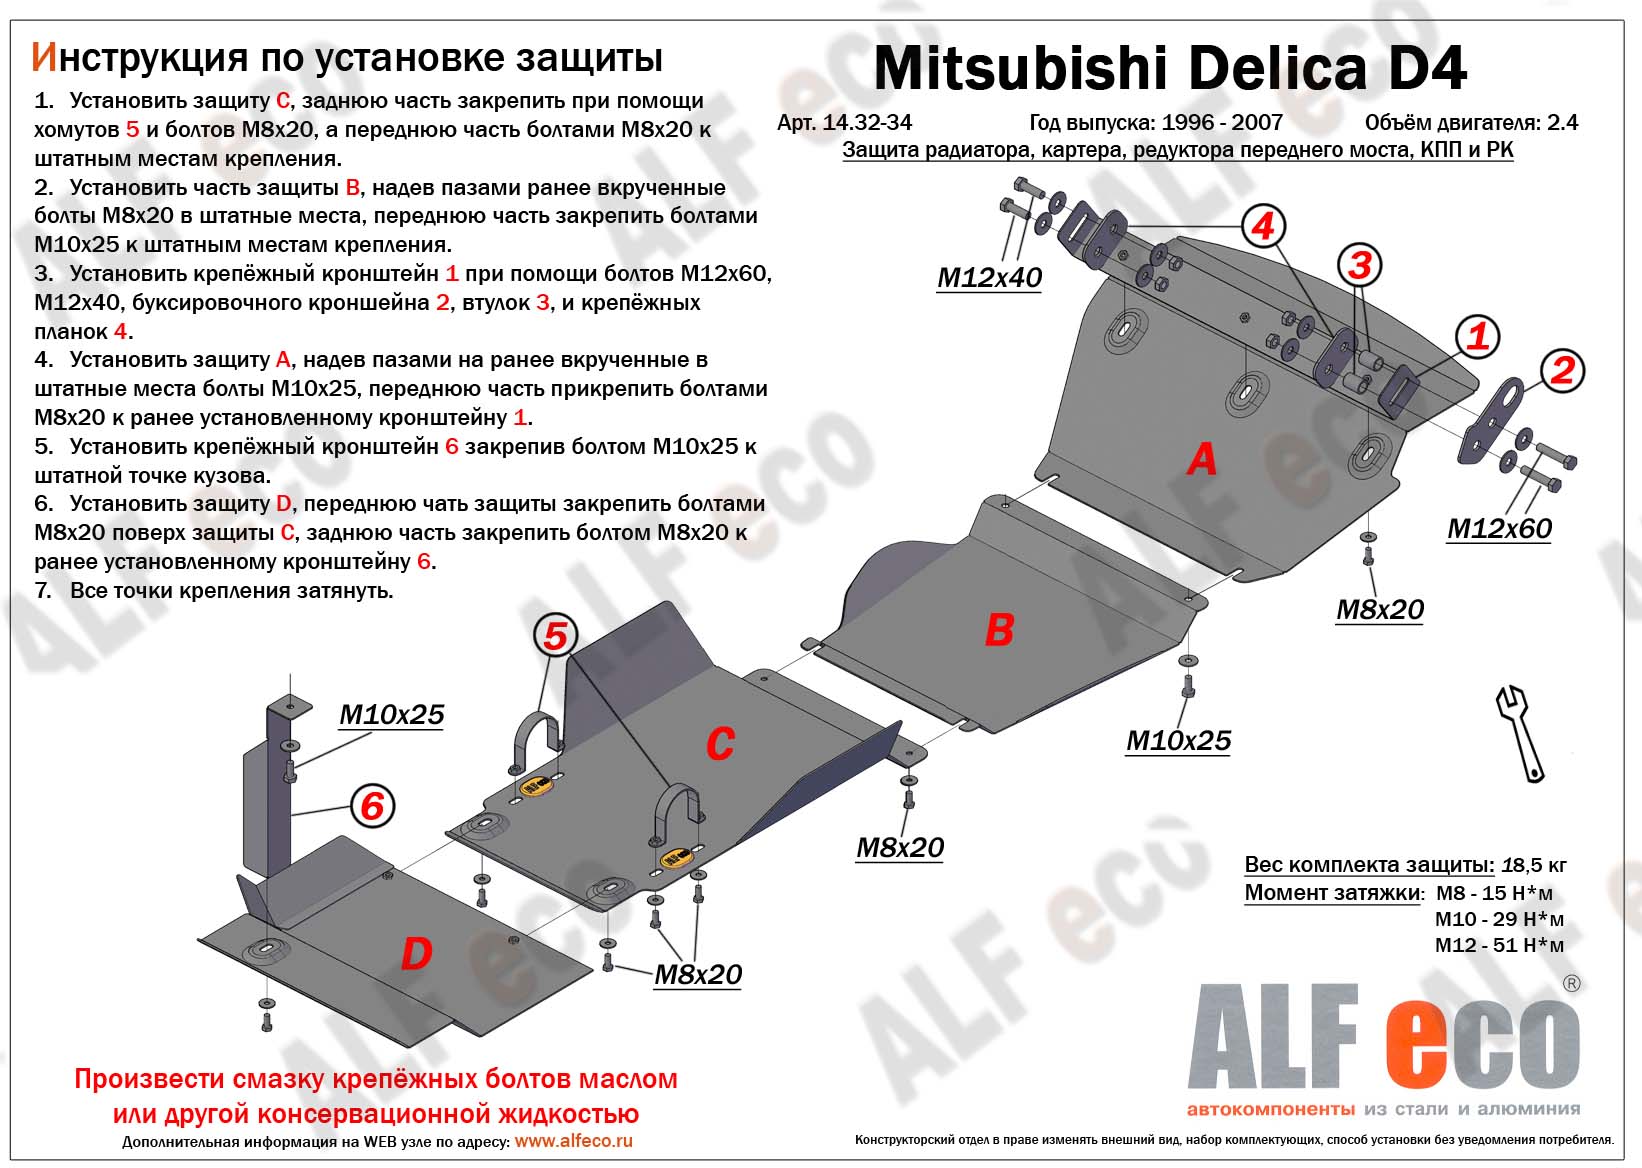 Защита  радиатора и картера для Mitsubishi Delica D4 1993-2007  V-2,4 , ALFeco, алюминий 4мм, арт. ALF1432al